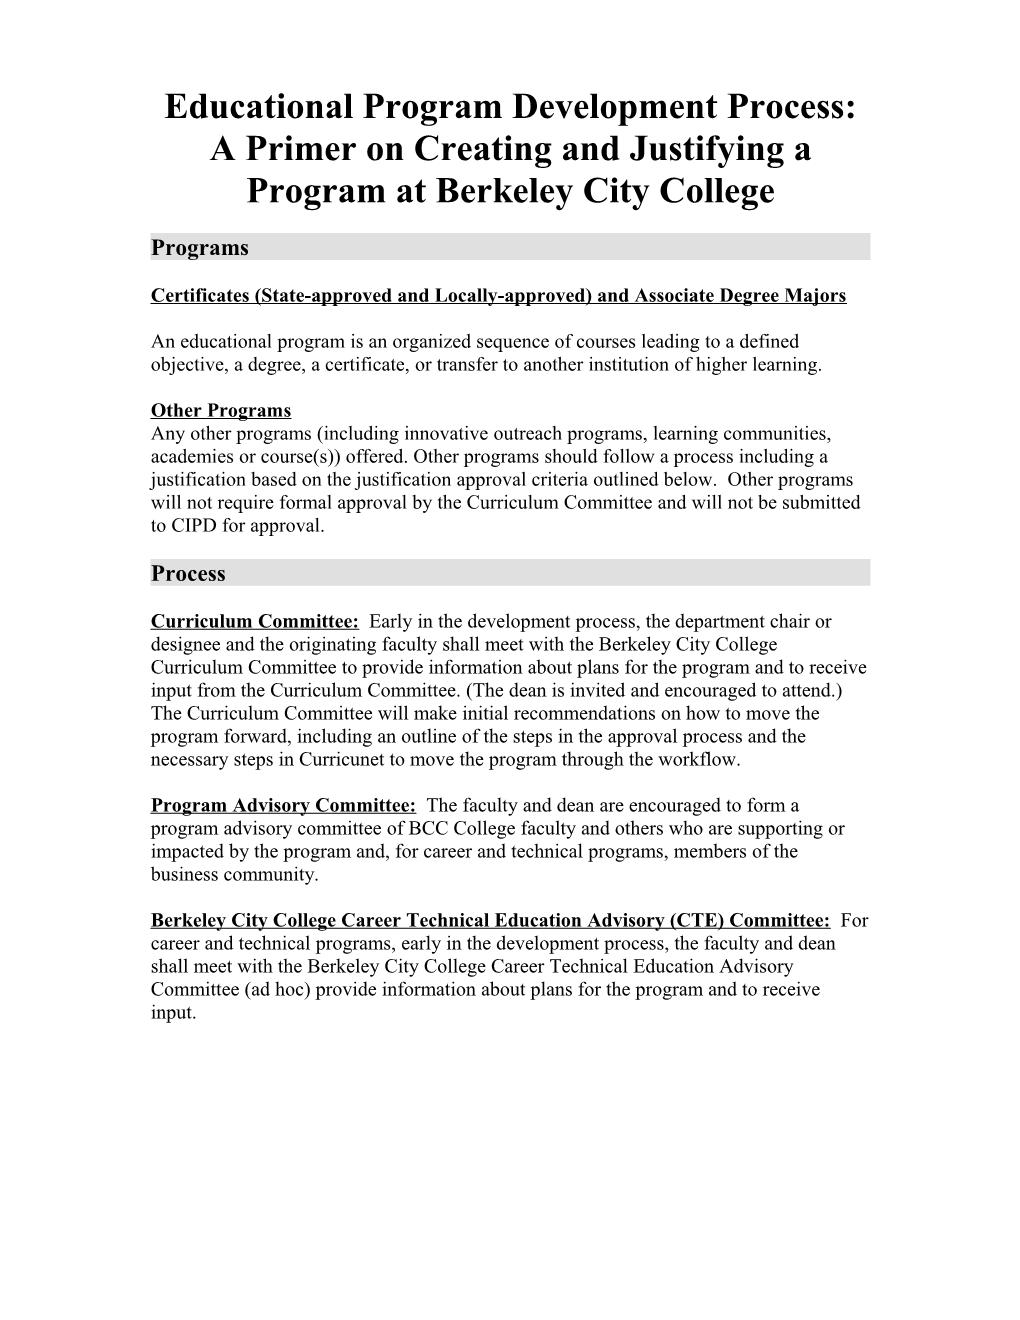 Educational Program Development Process Task Force